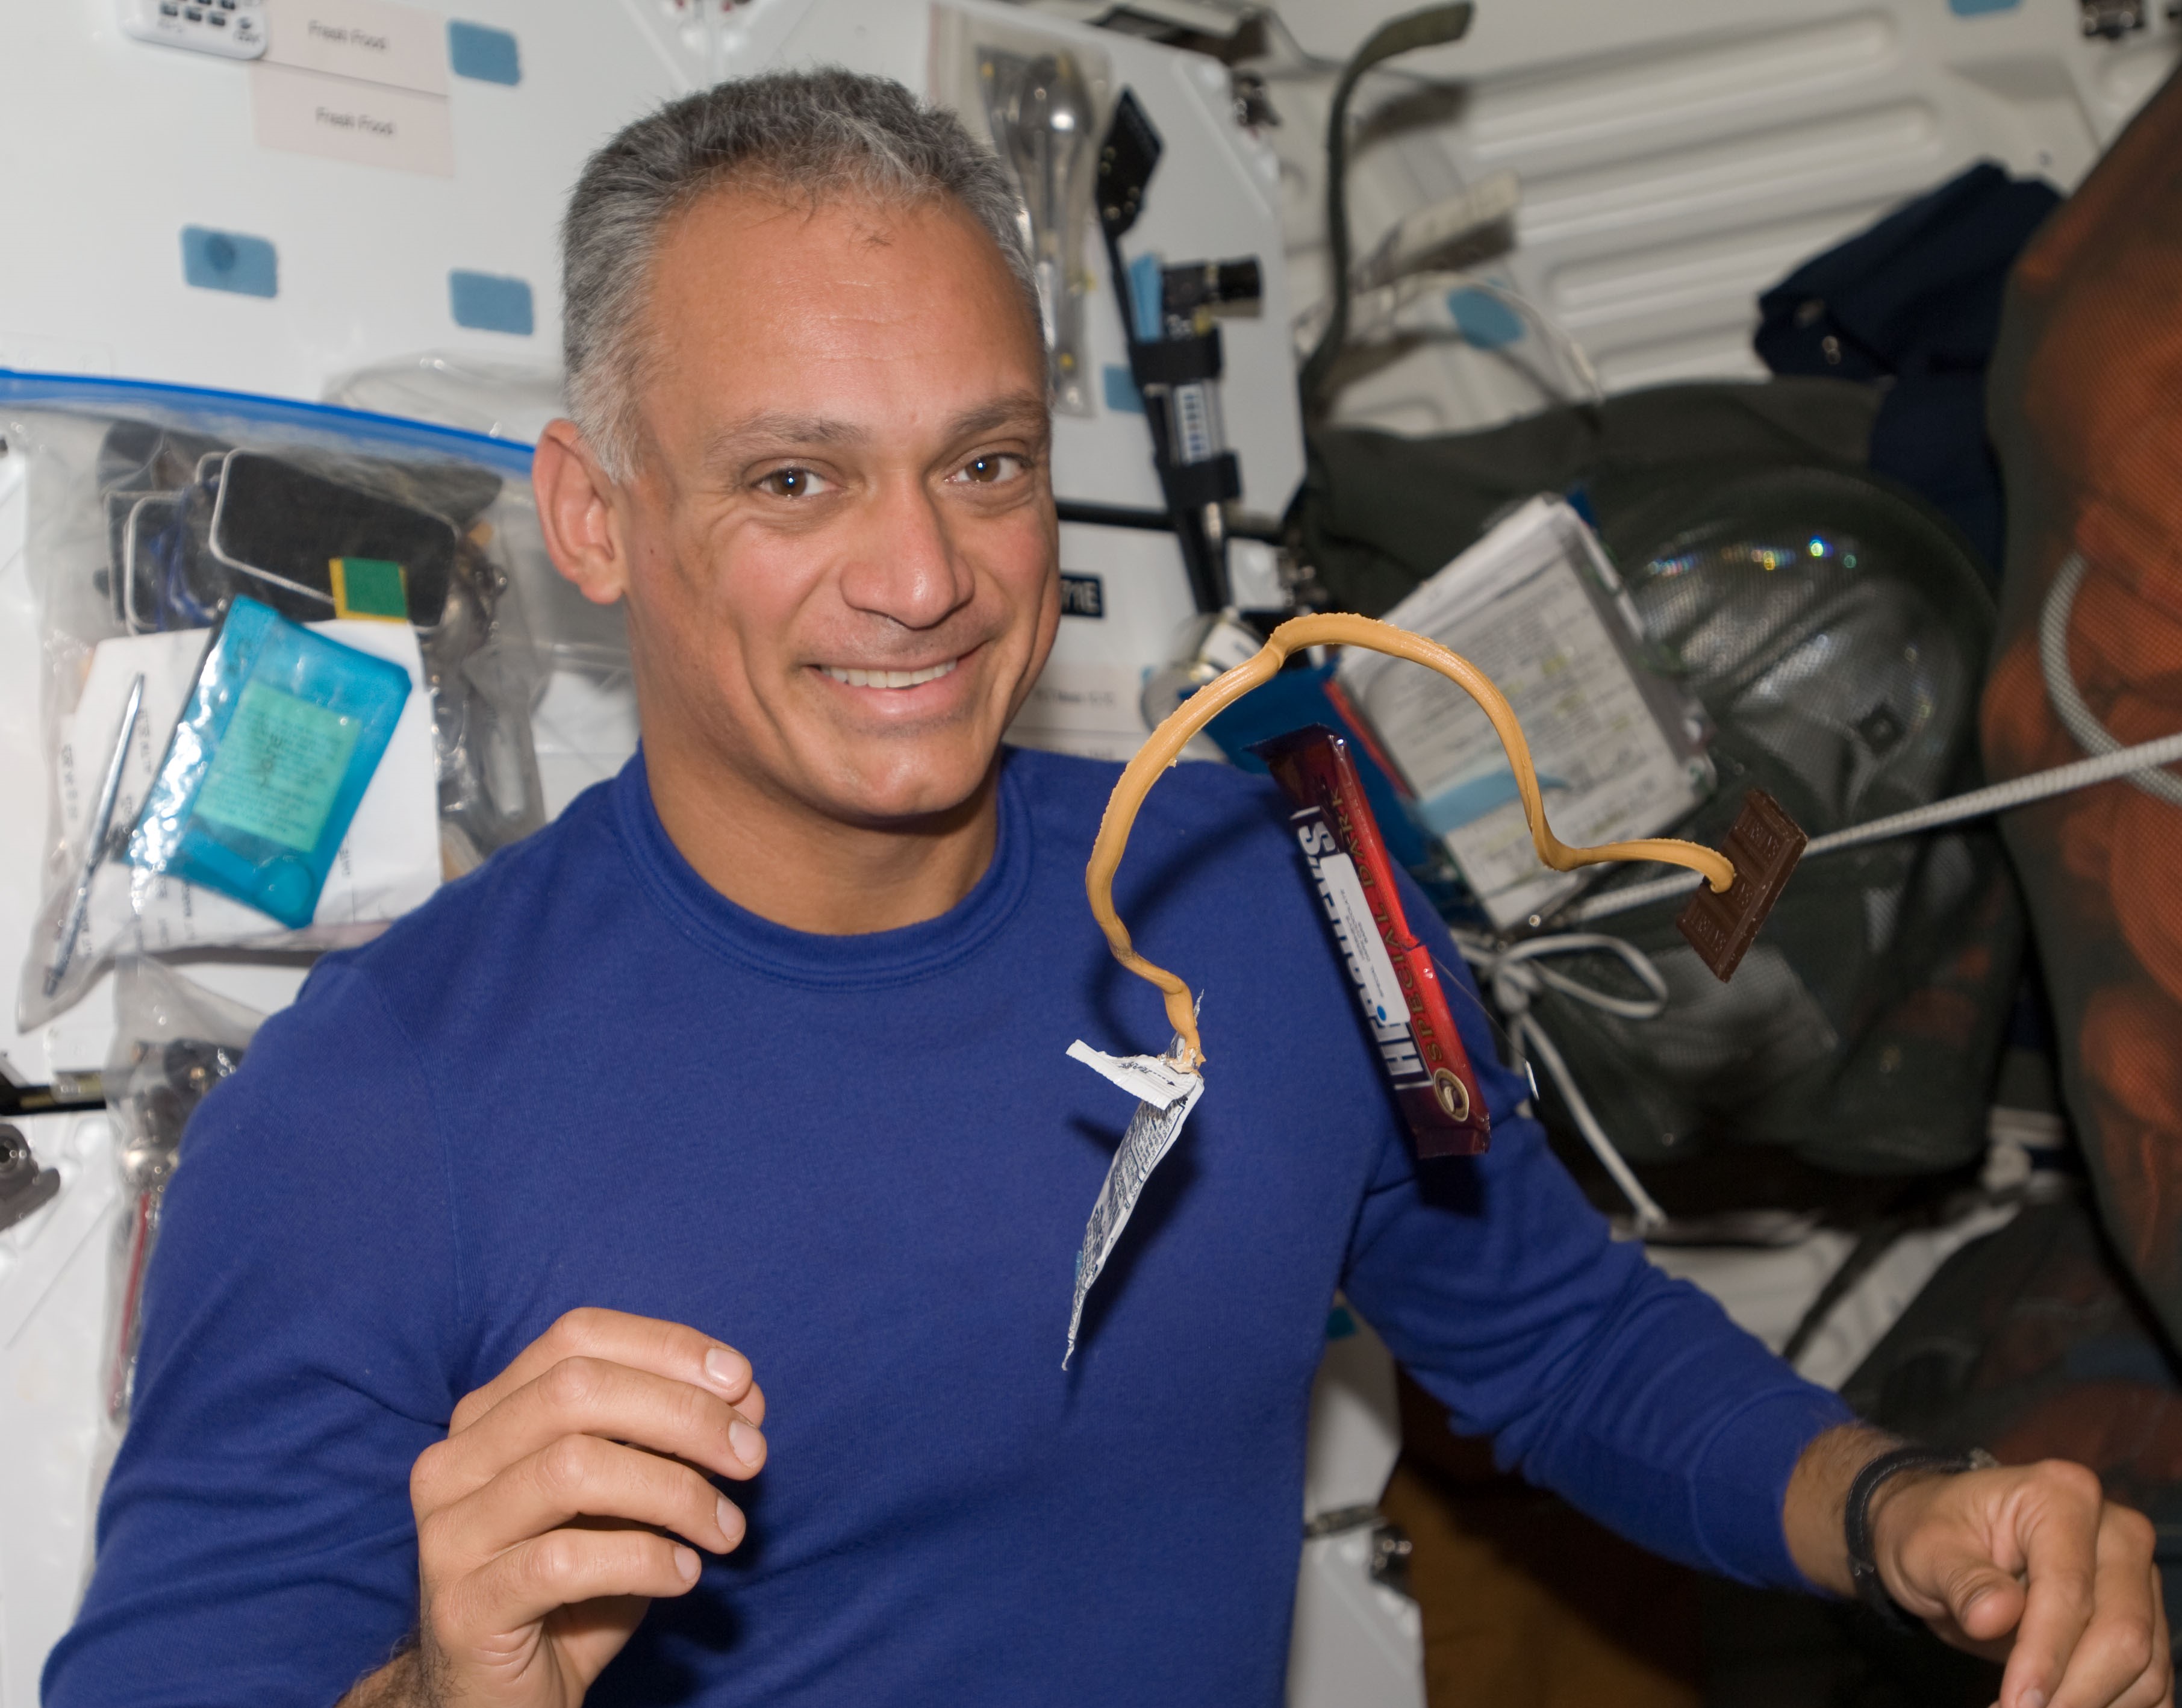 NASA astronaut John D. “Danny” Olivas eating a chocolate and peanut butter snack